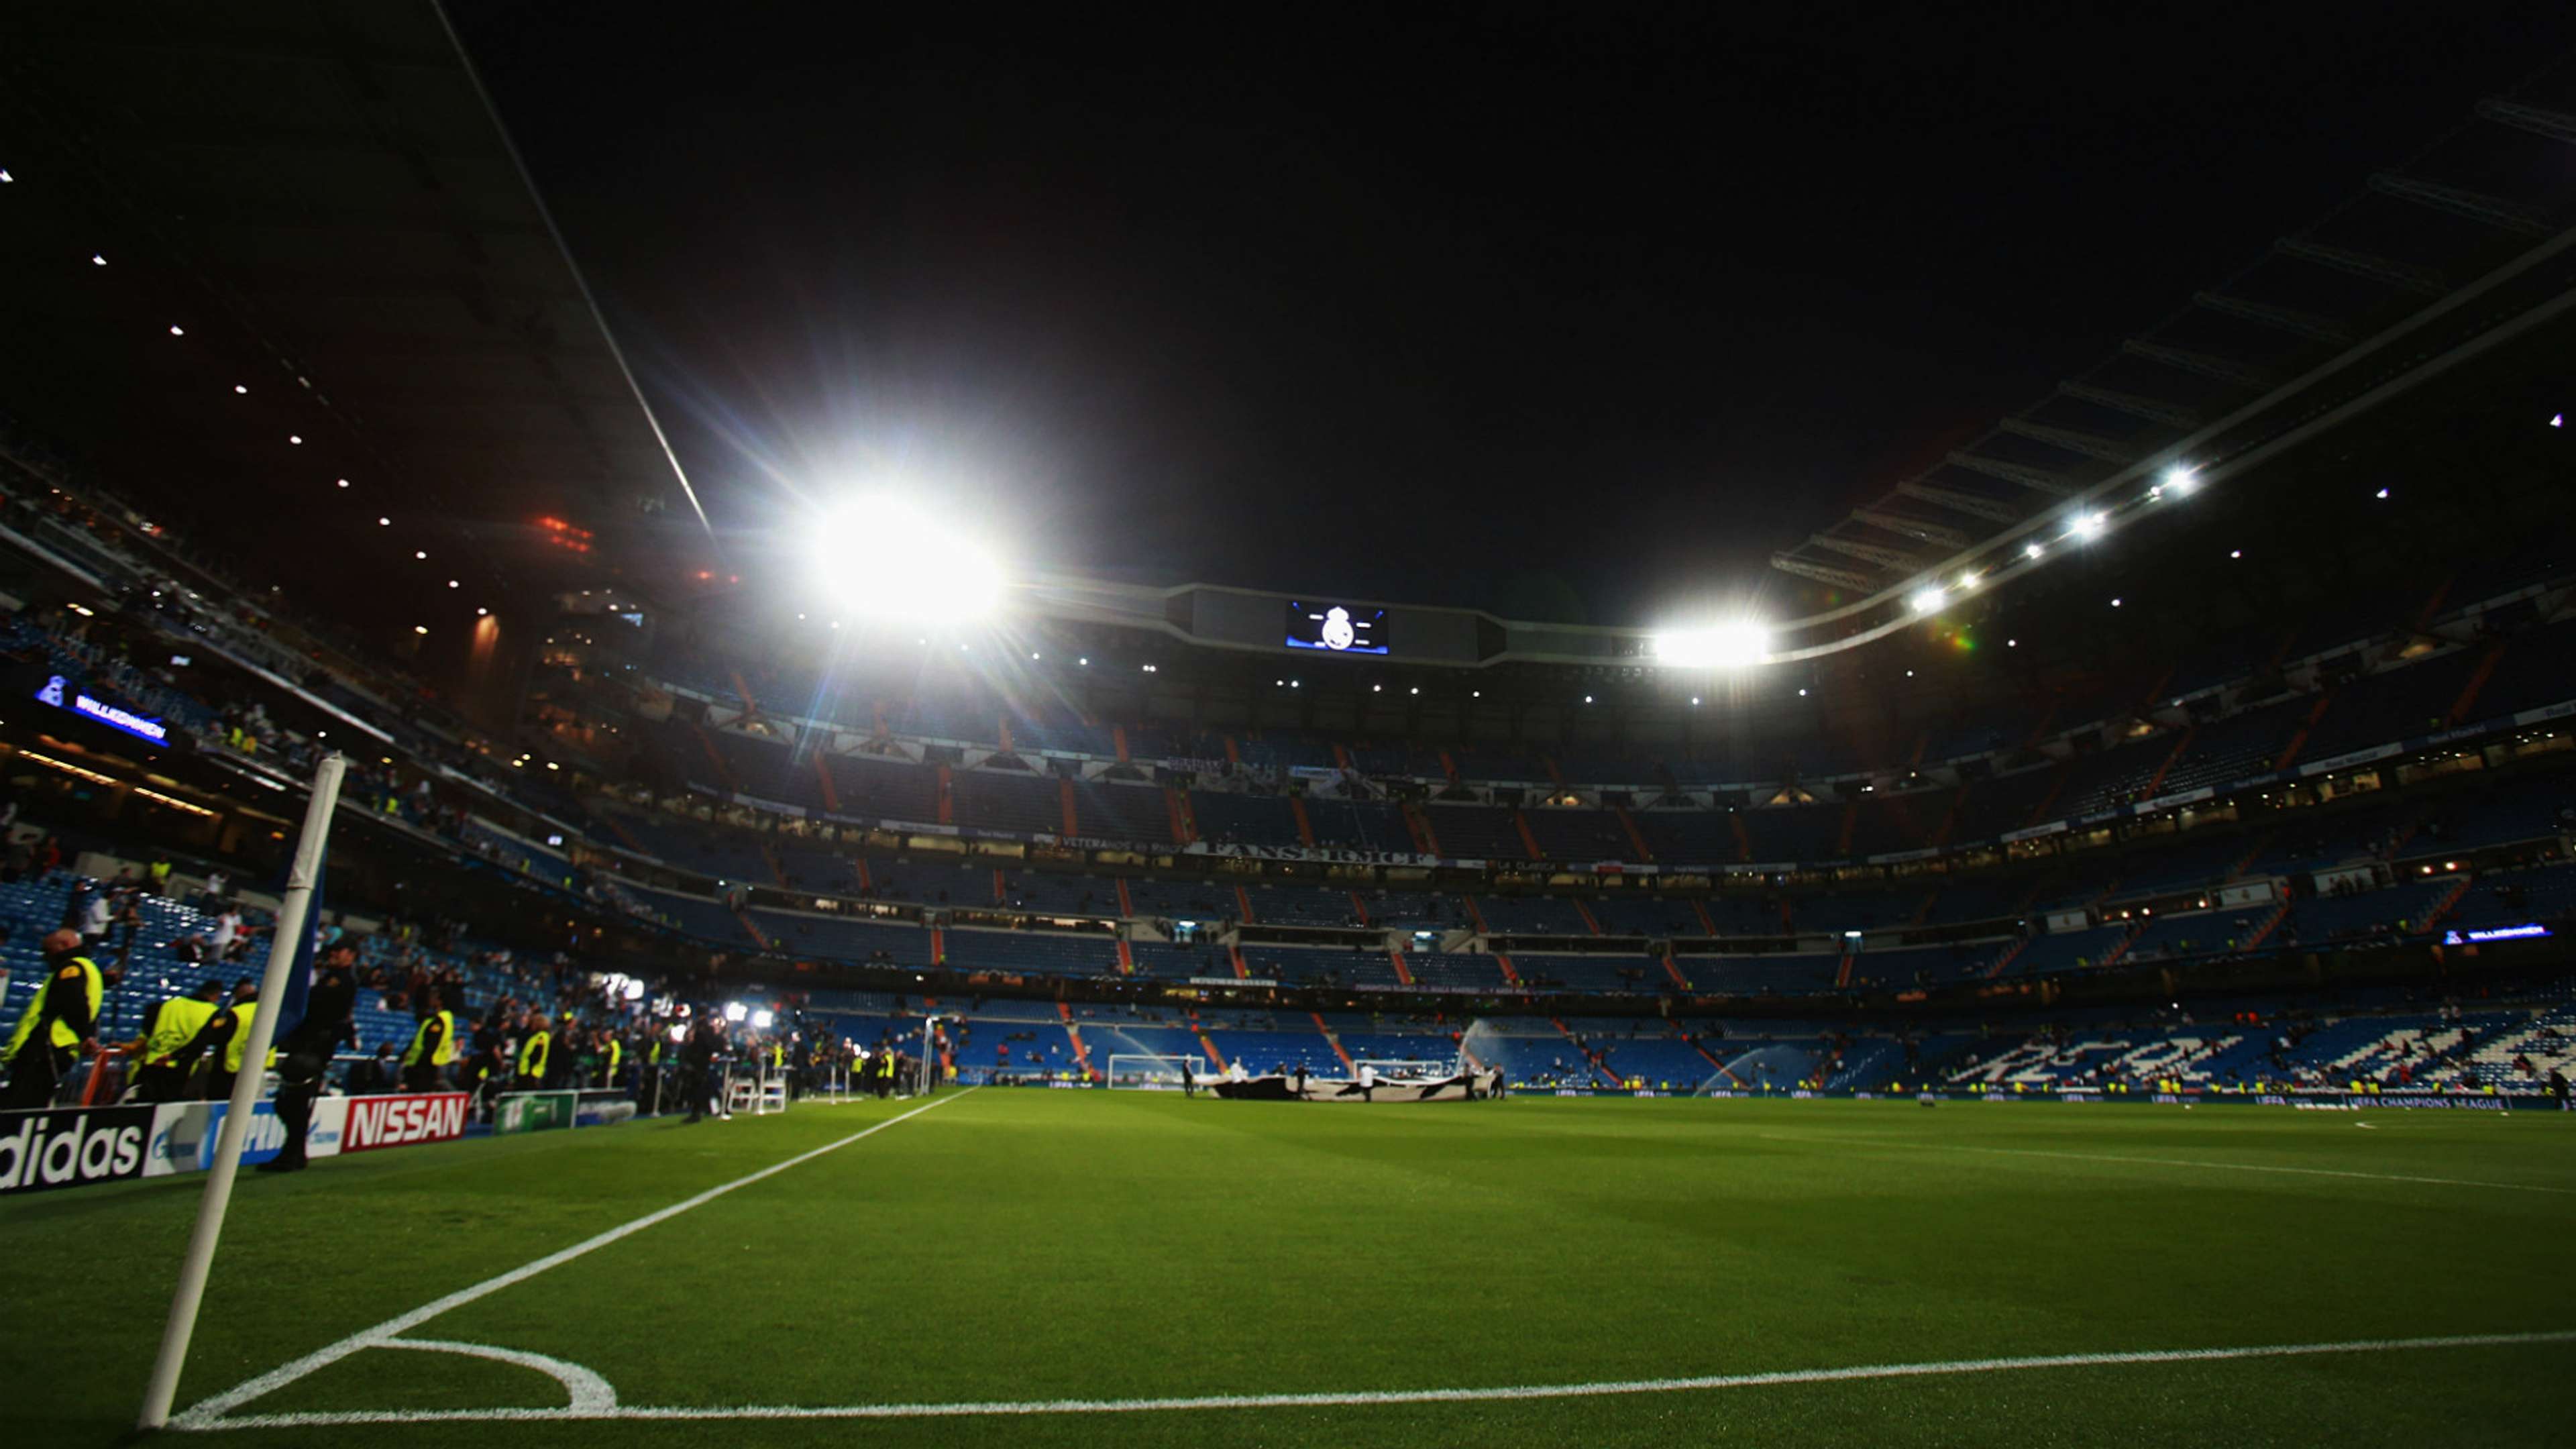 Santiago Bernabeu Stadium Real Madrid Spain 03102015